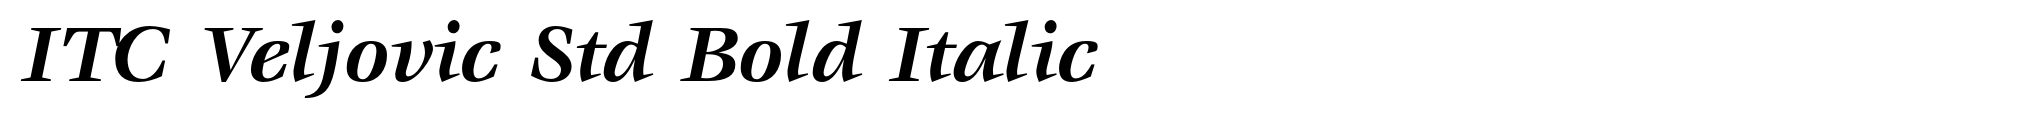 ITC Veljovic Std Bold Italic image